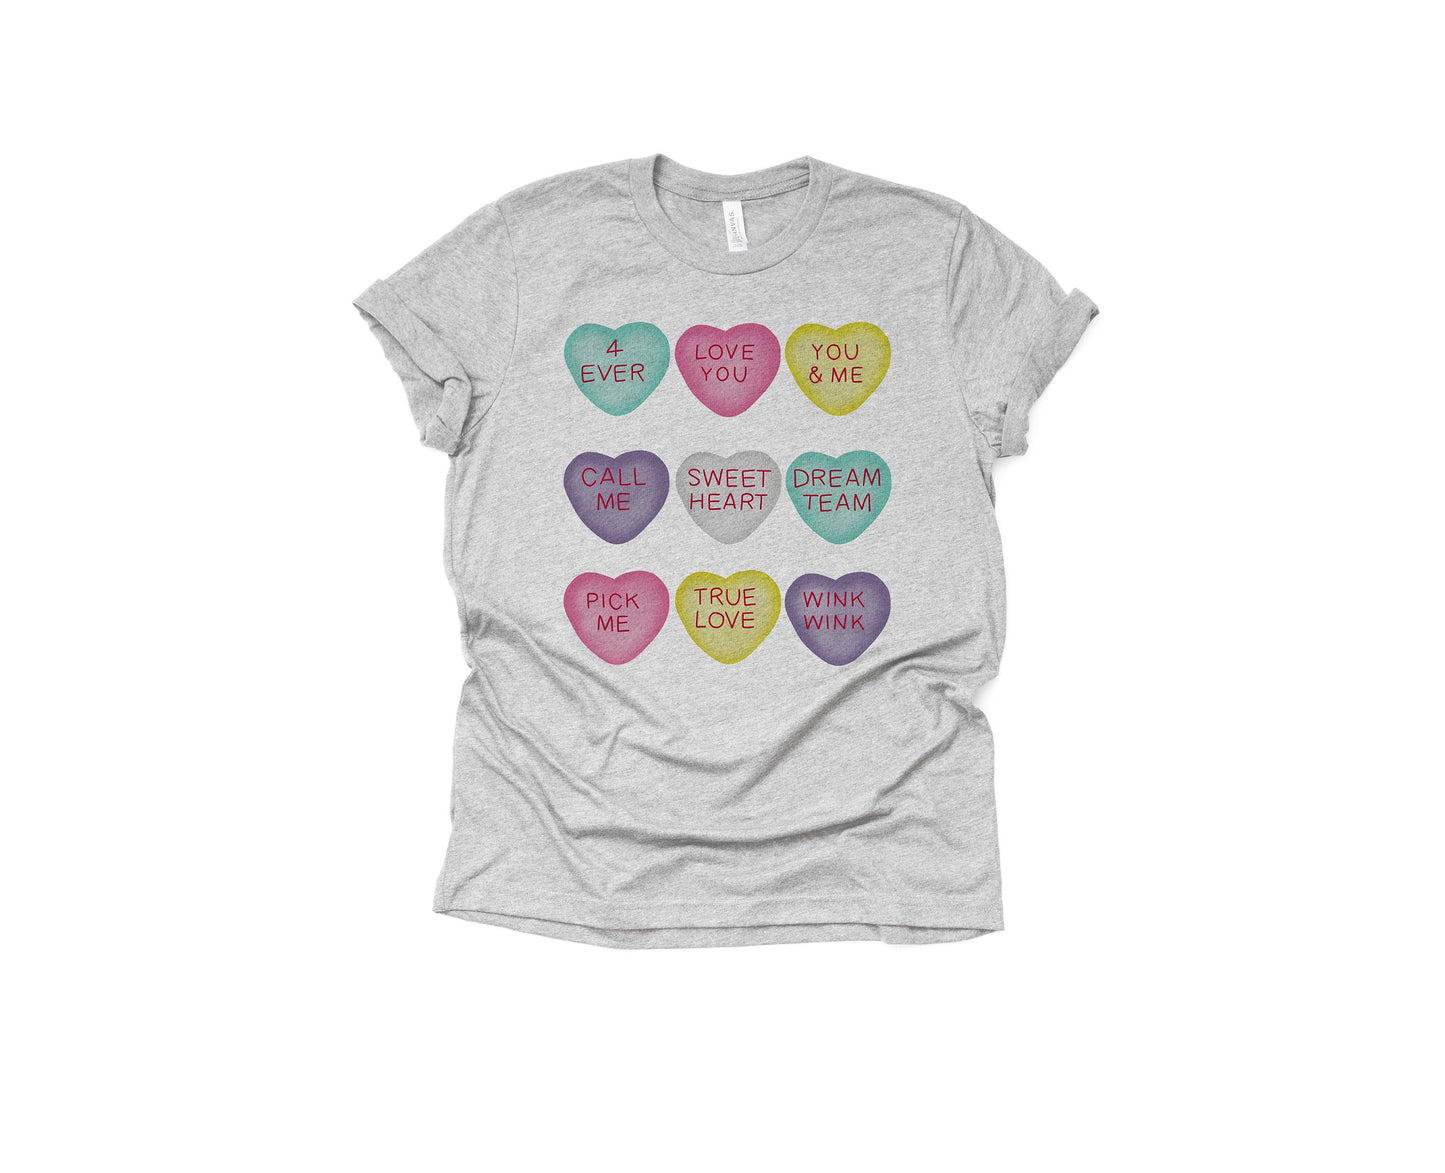 Conversation Hearts Shirt - Valentine's Day Shirt for Women